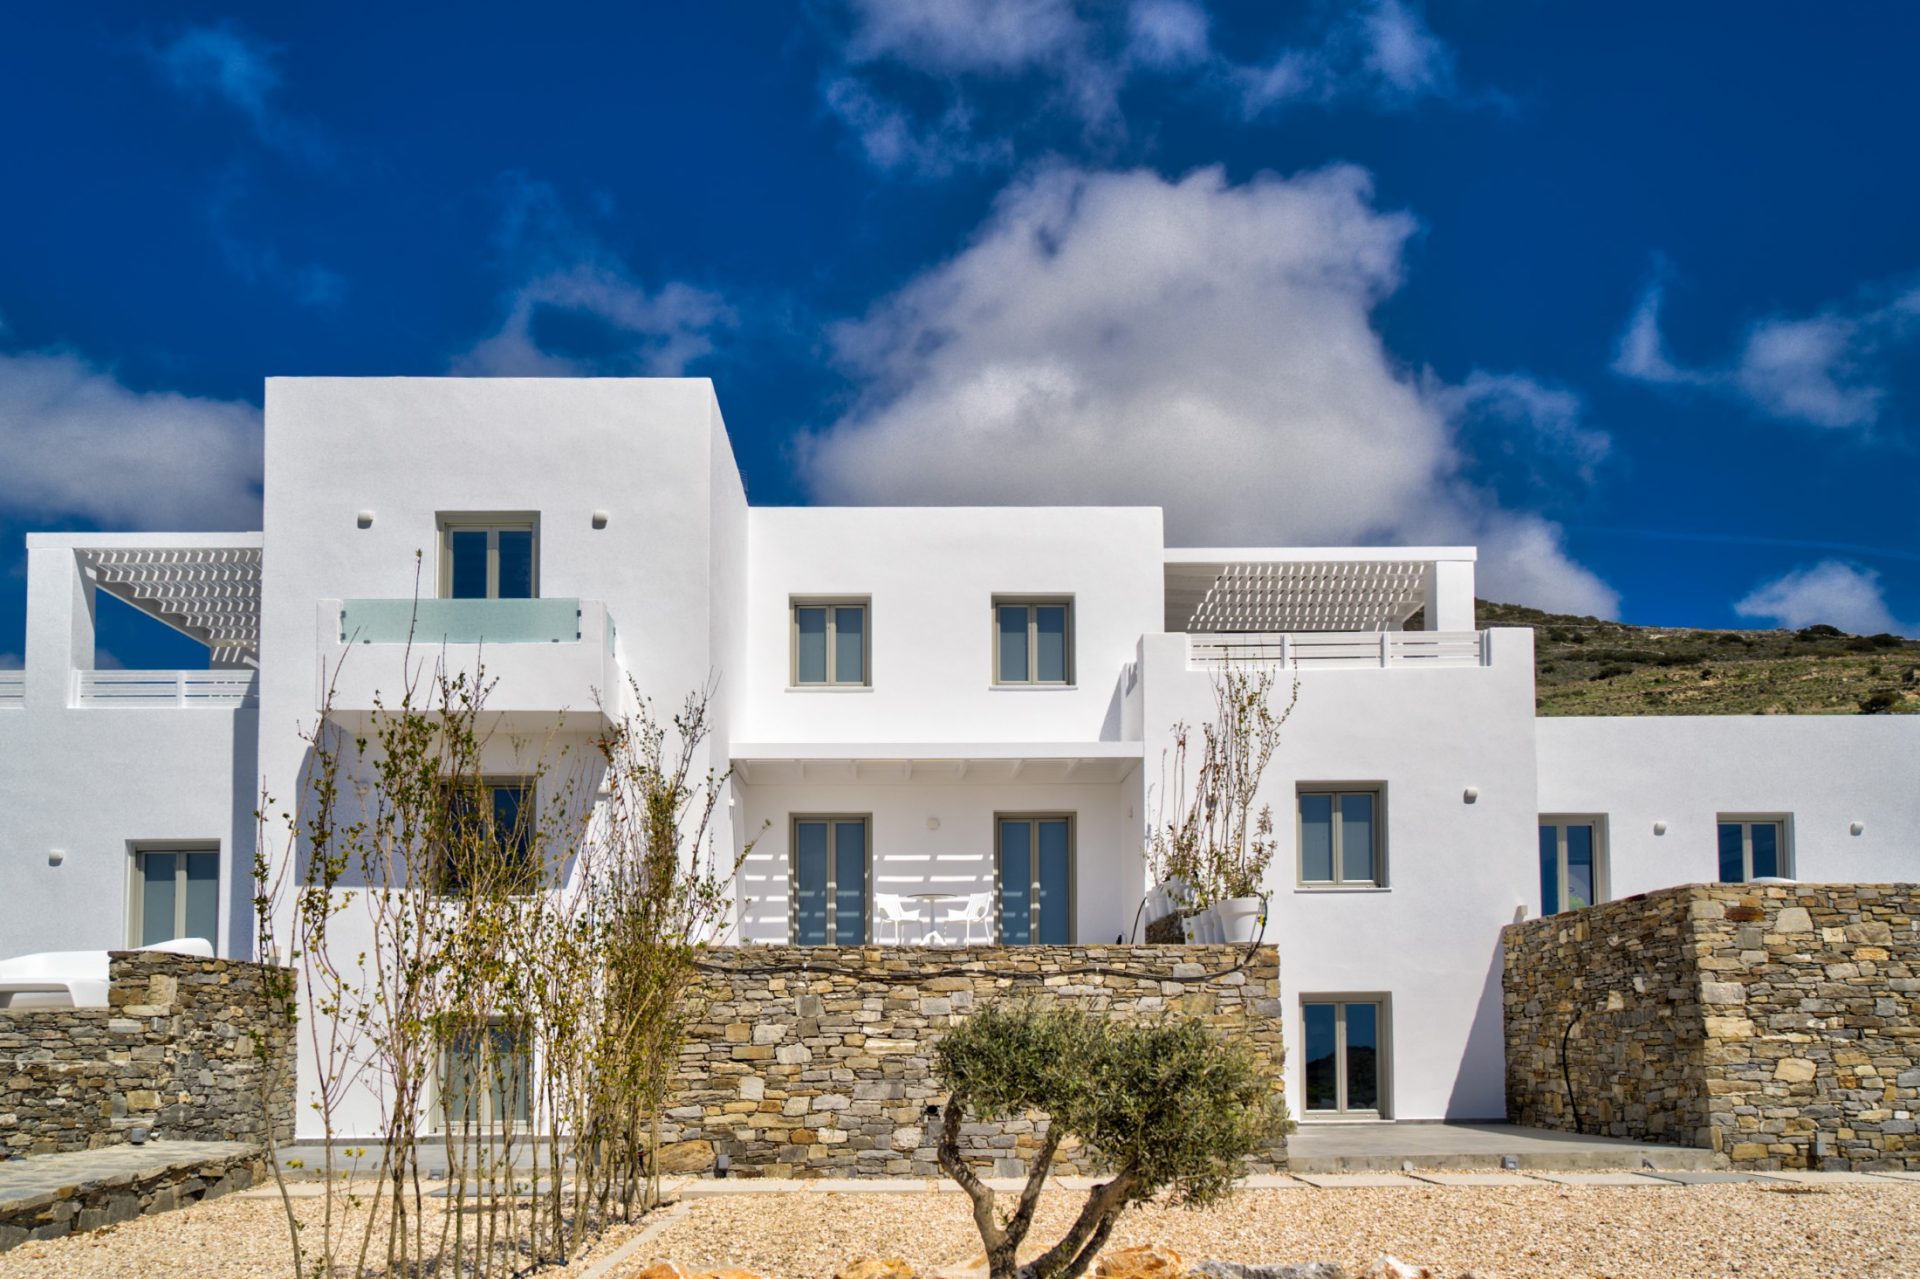 rent a villa in greece august